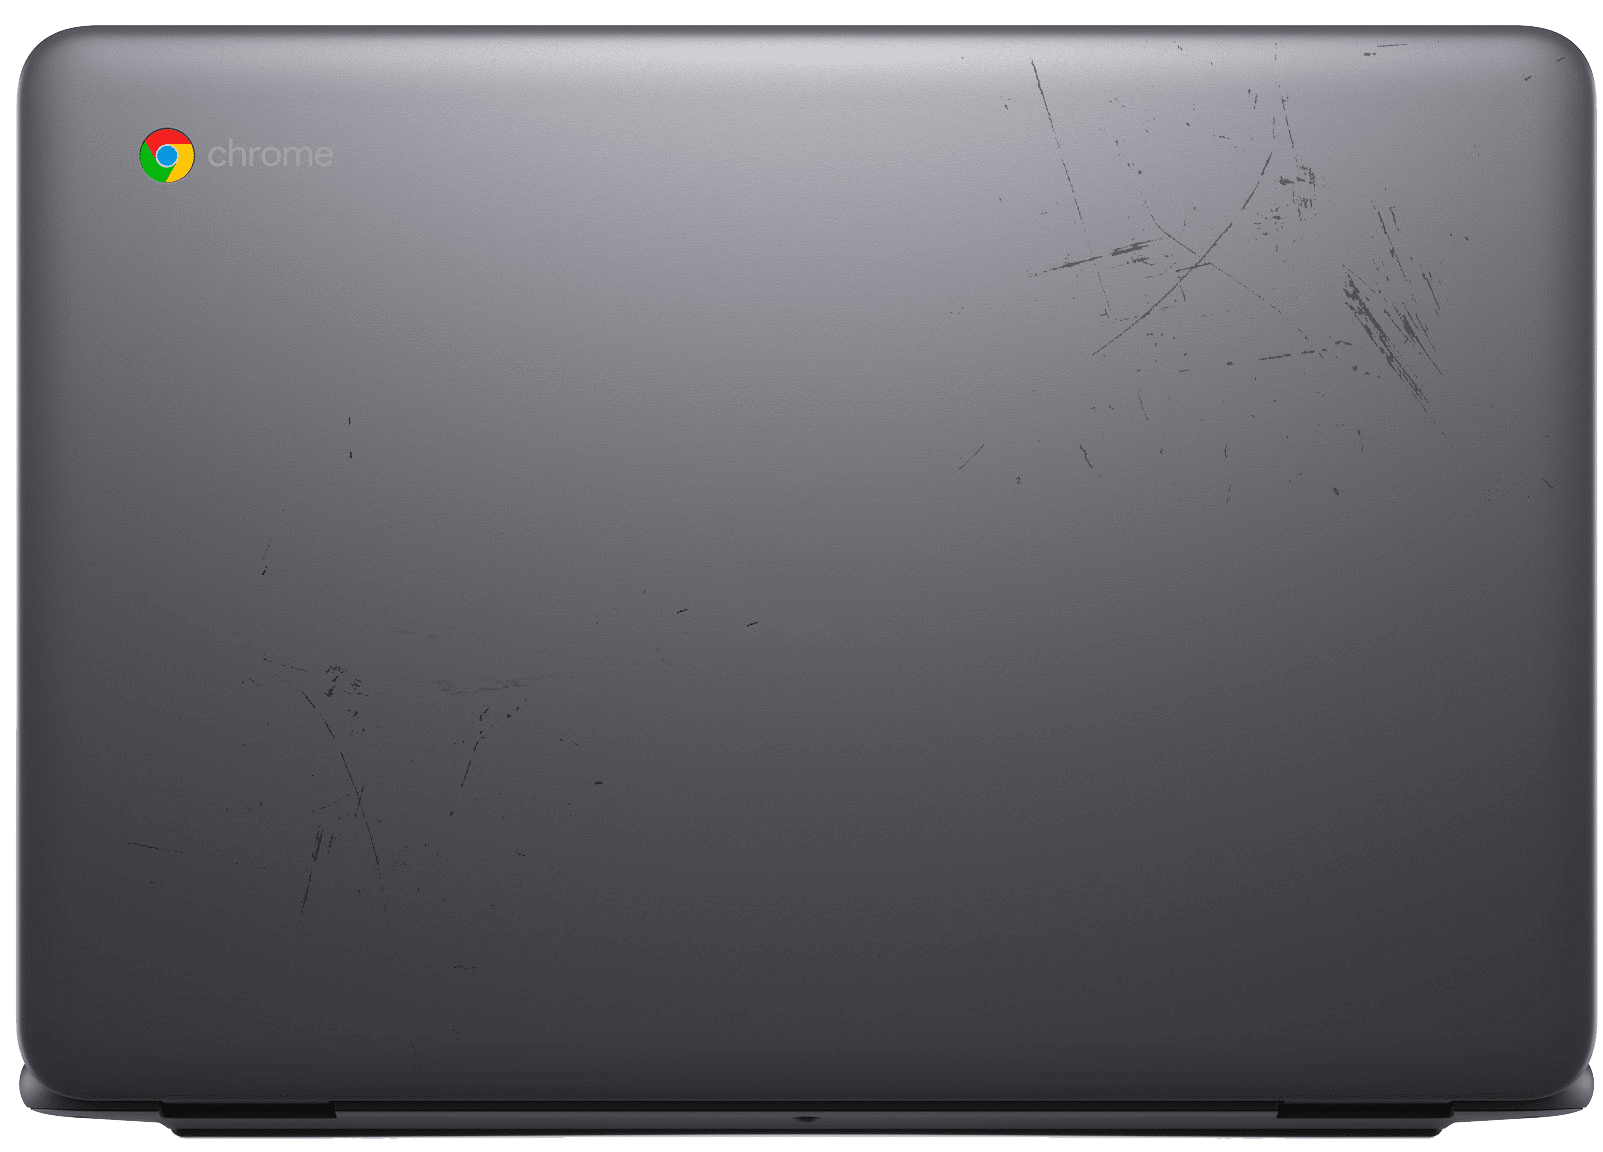 Dell Chromebook - Before